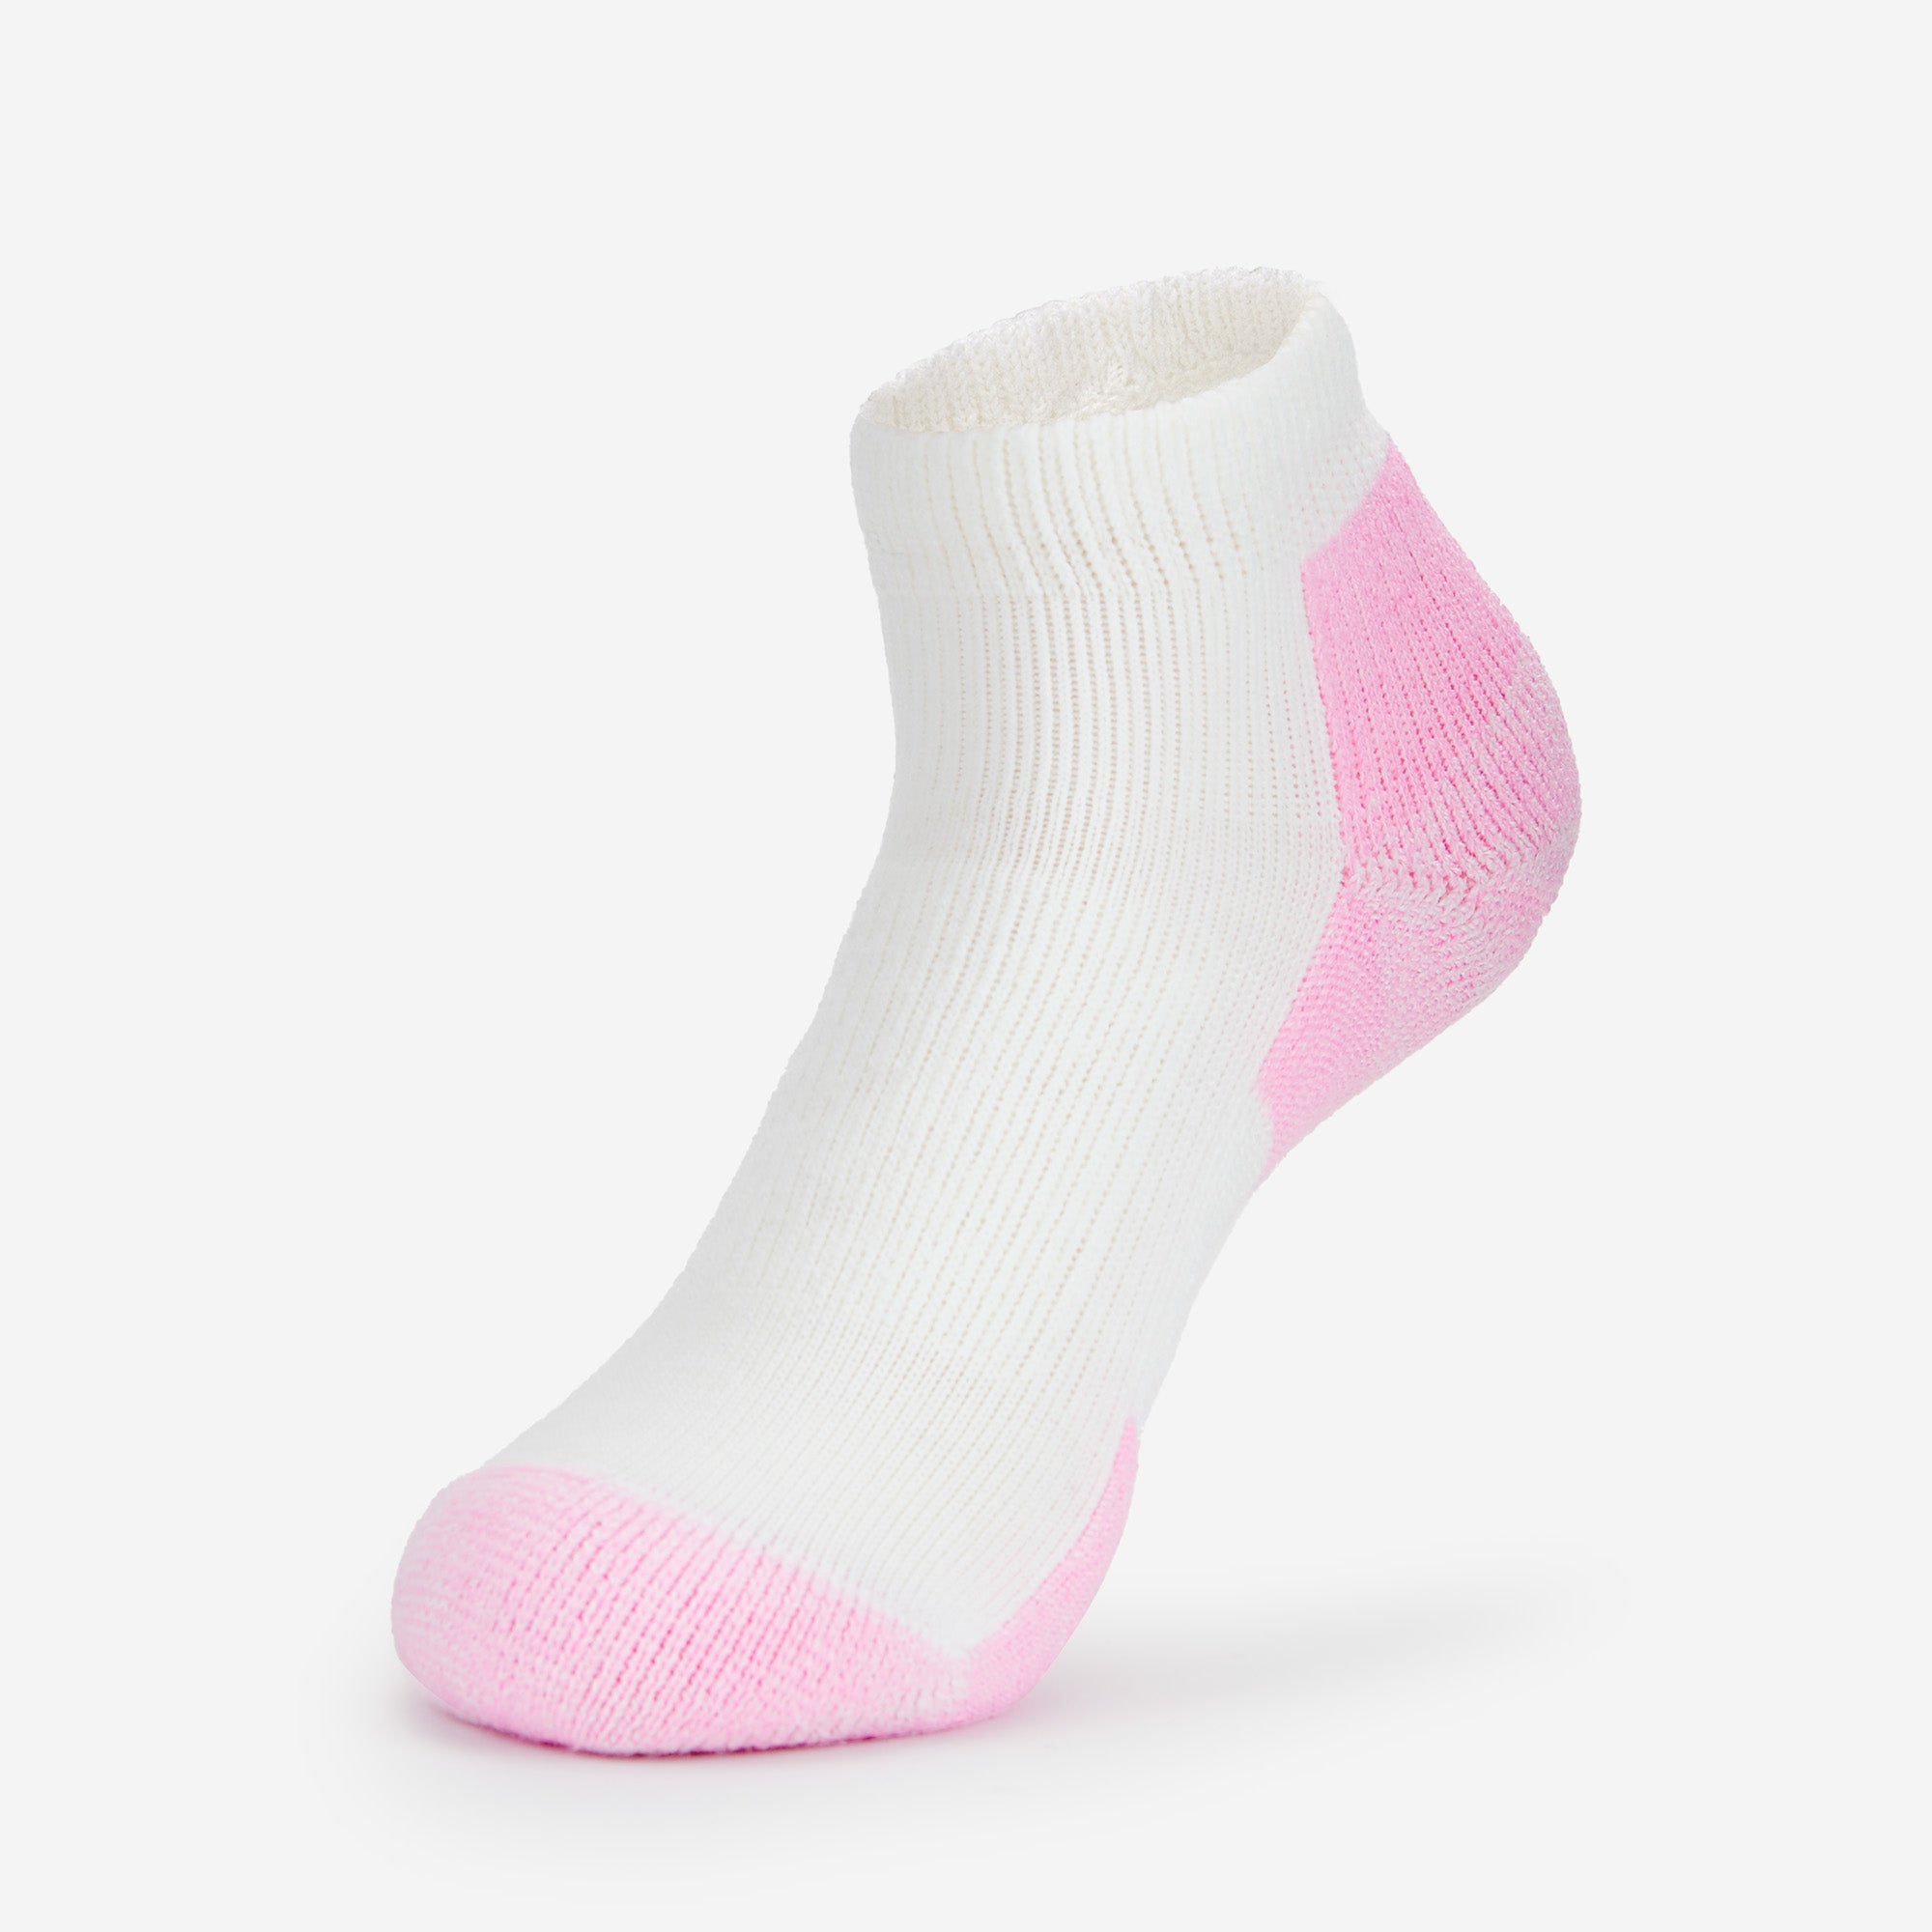 Thorlos Women’s Max Cushion Distance Walking Socks